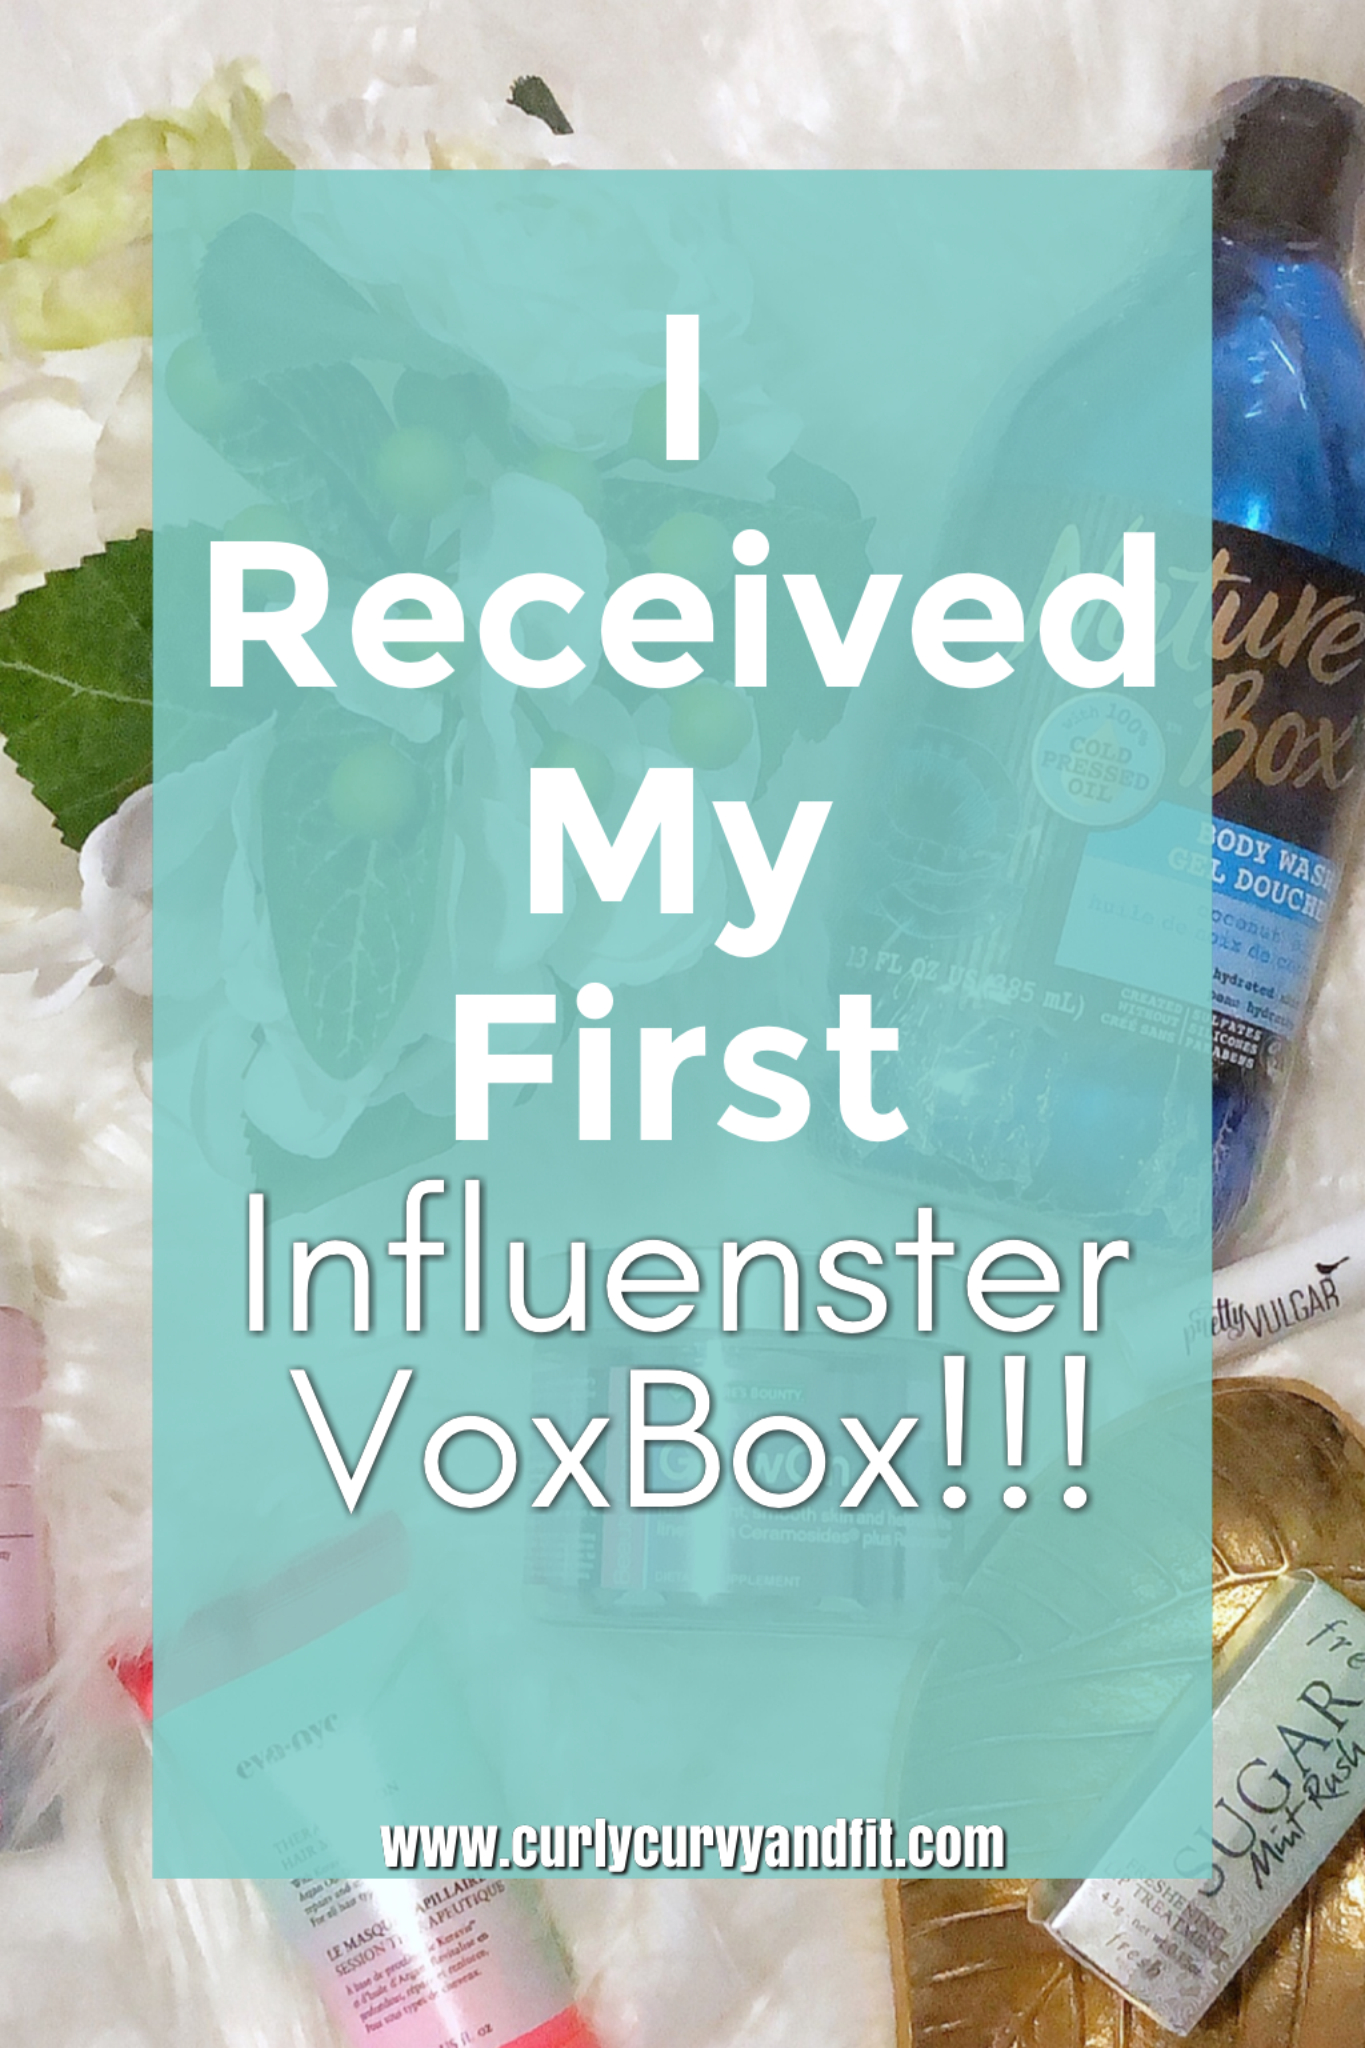 I Received My First Influenster VoxBox!!